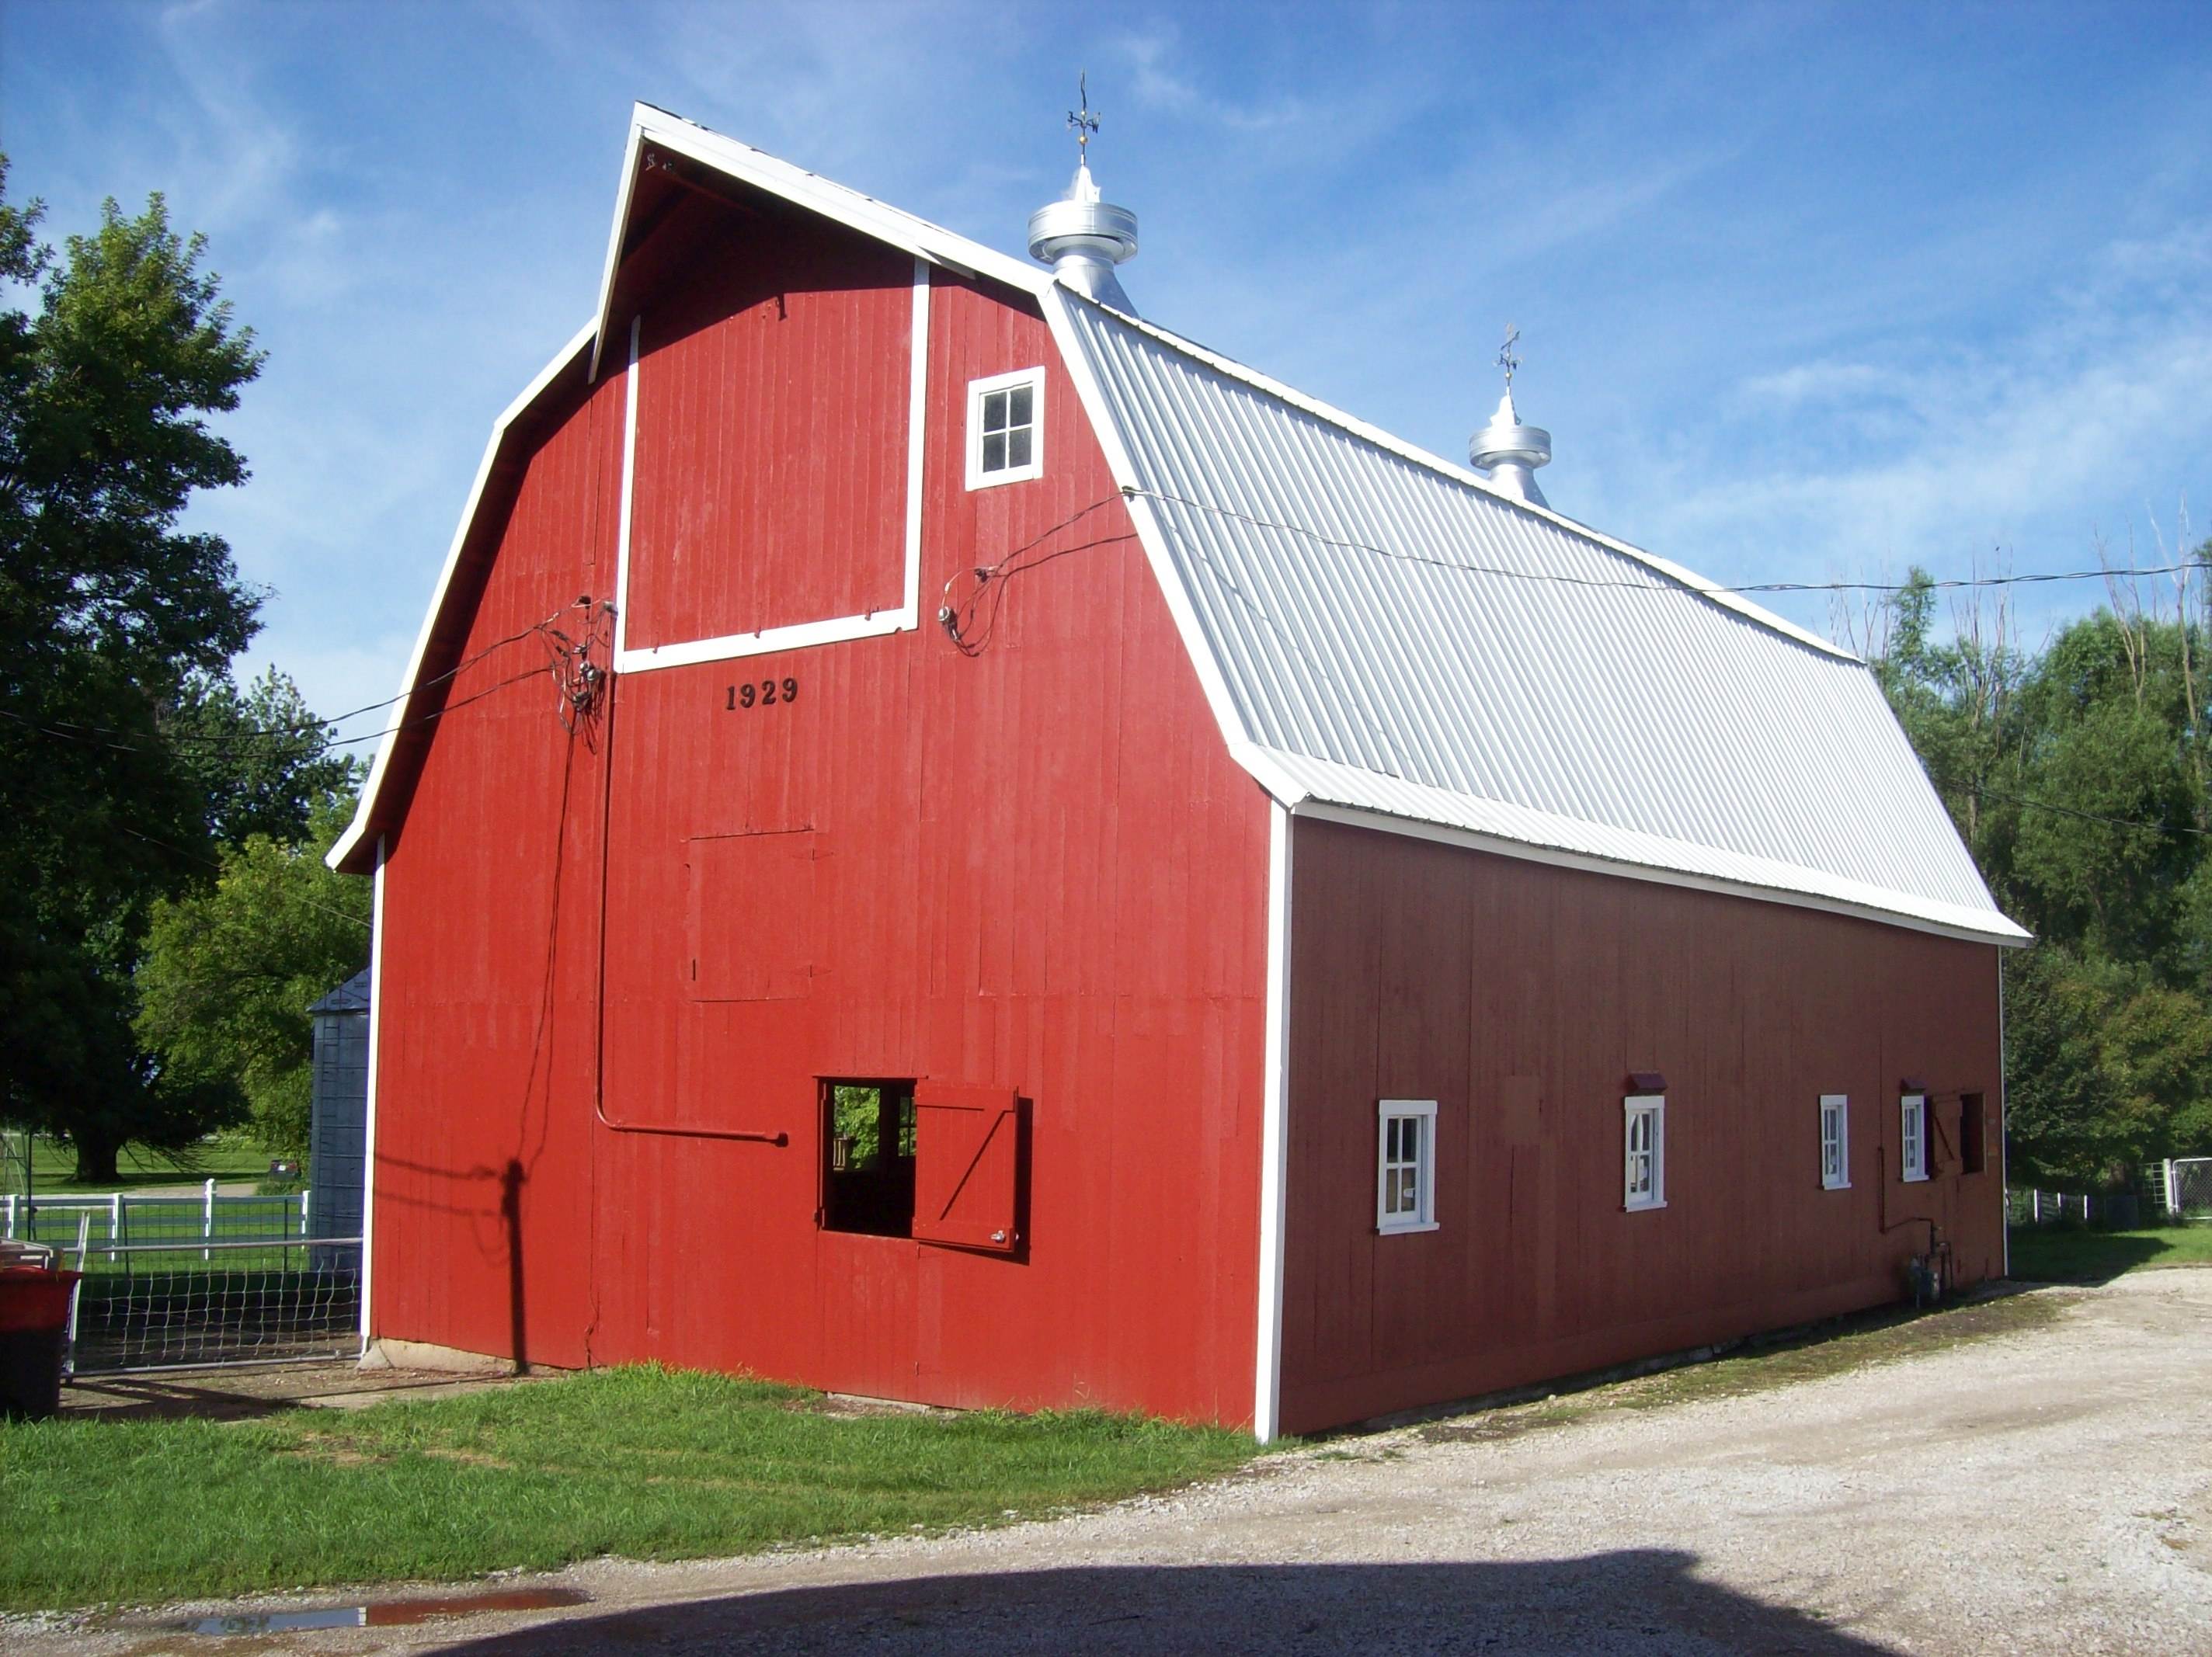 Iowa Barn Foundation preserving Iowa's rural buildings